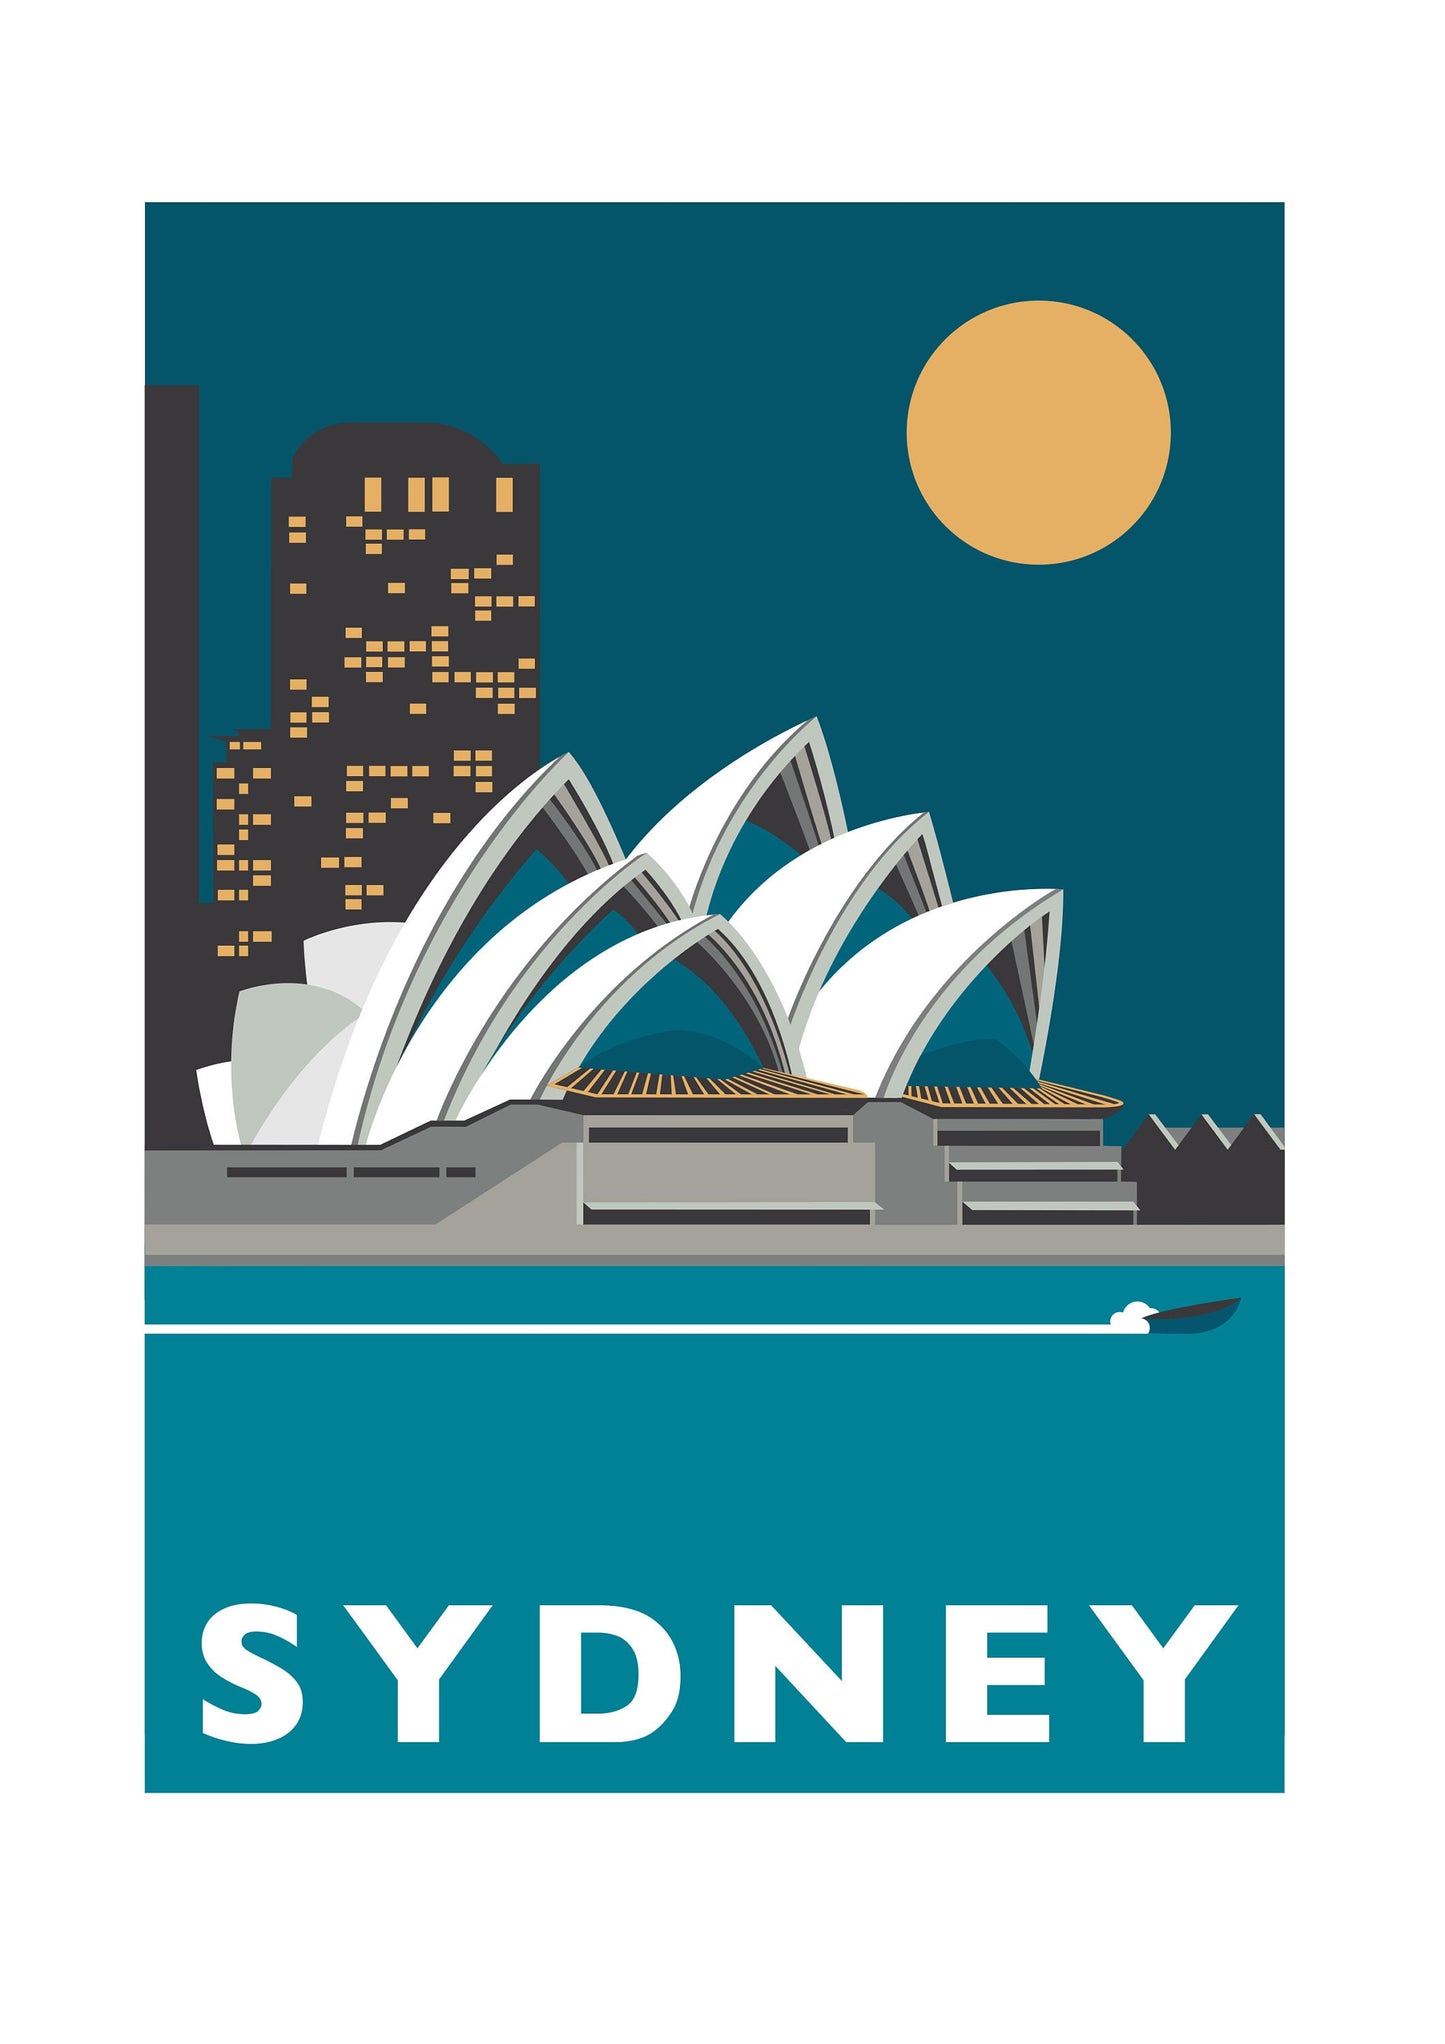 SYDNEY Travel Poster - Sydney Opera House - Art Deco Print - Illustration by Rebecca Pymar